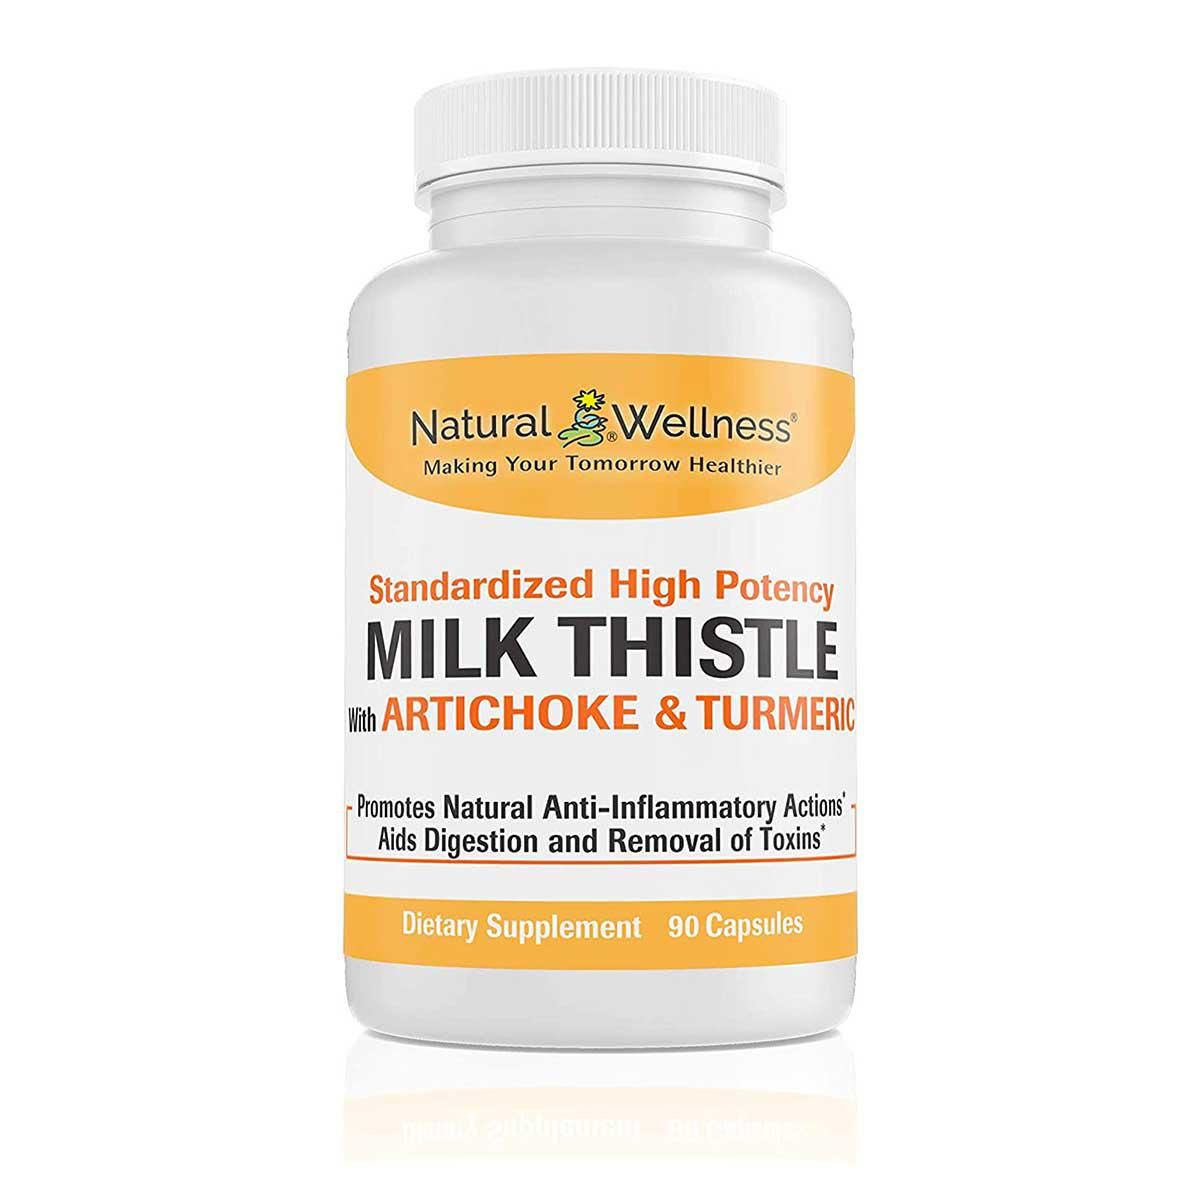  natural wellness milk thistle